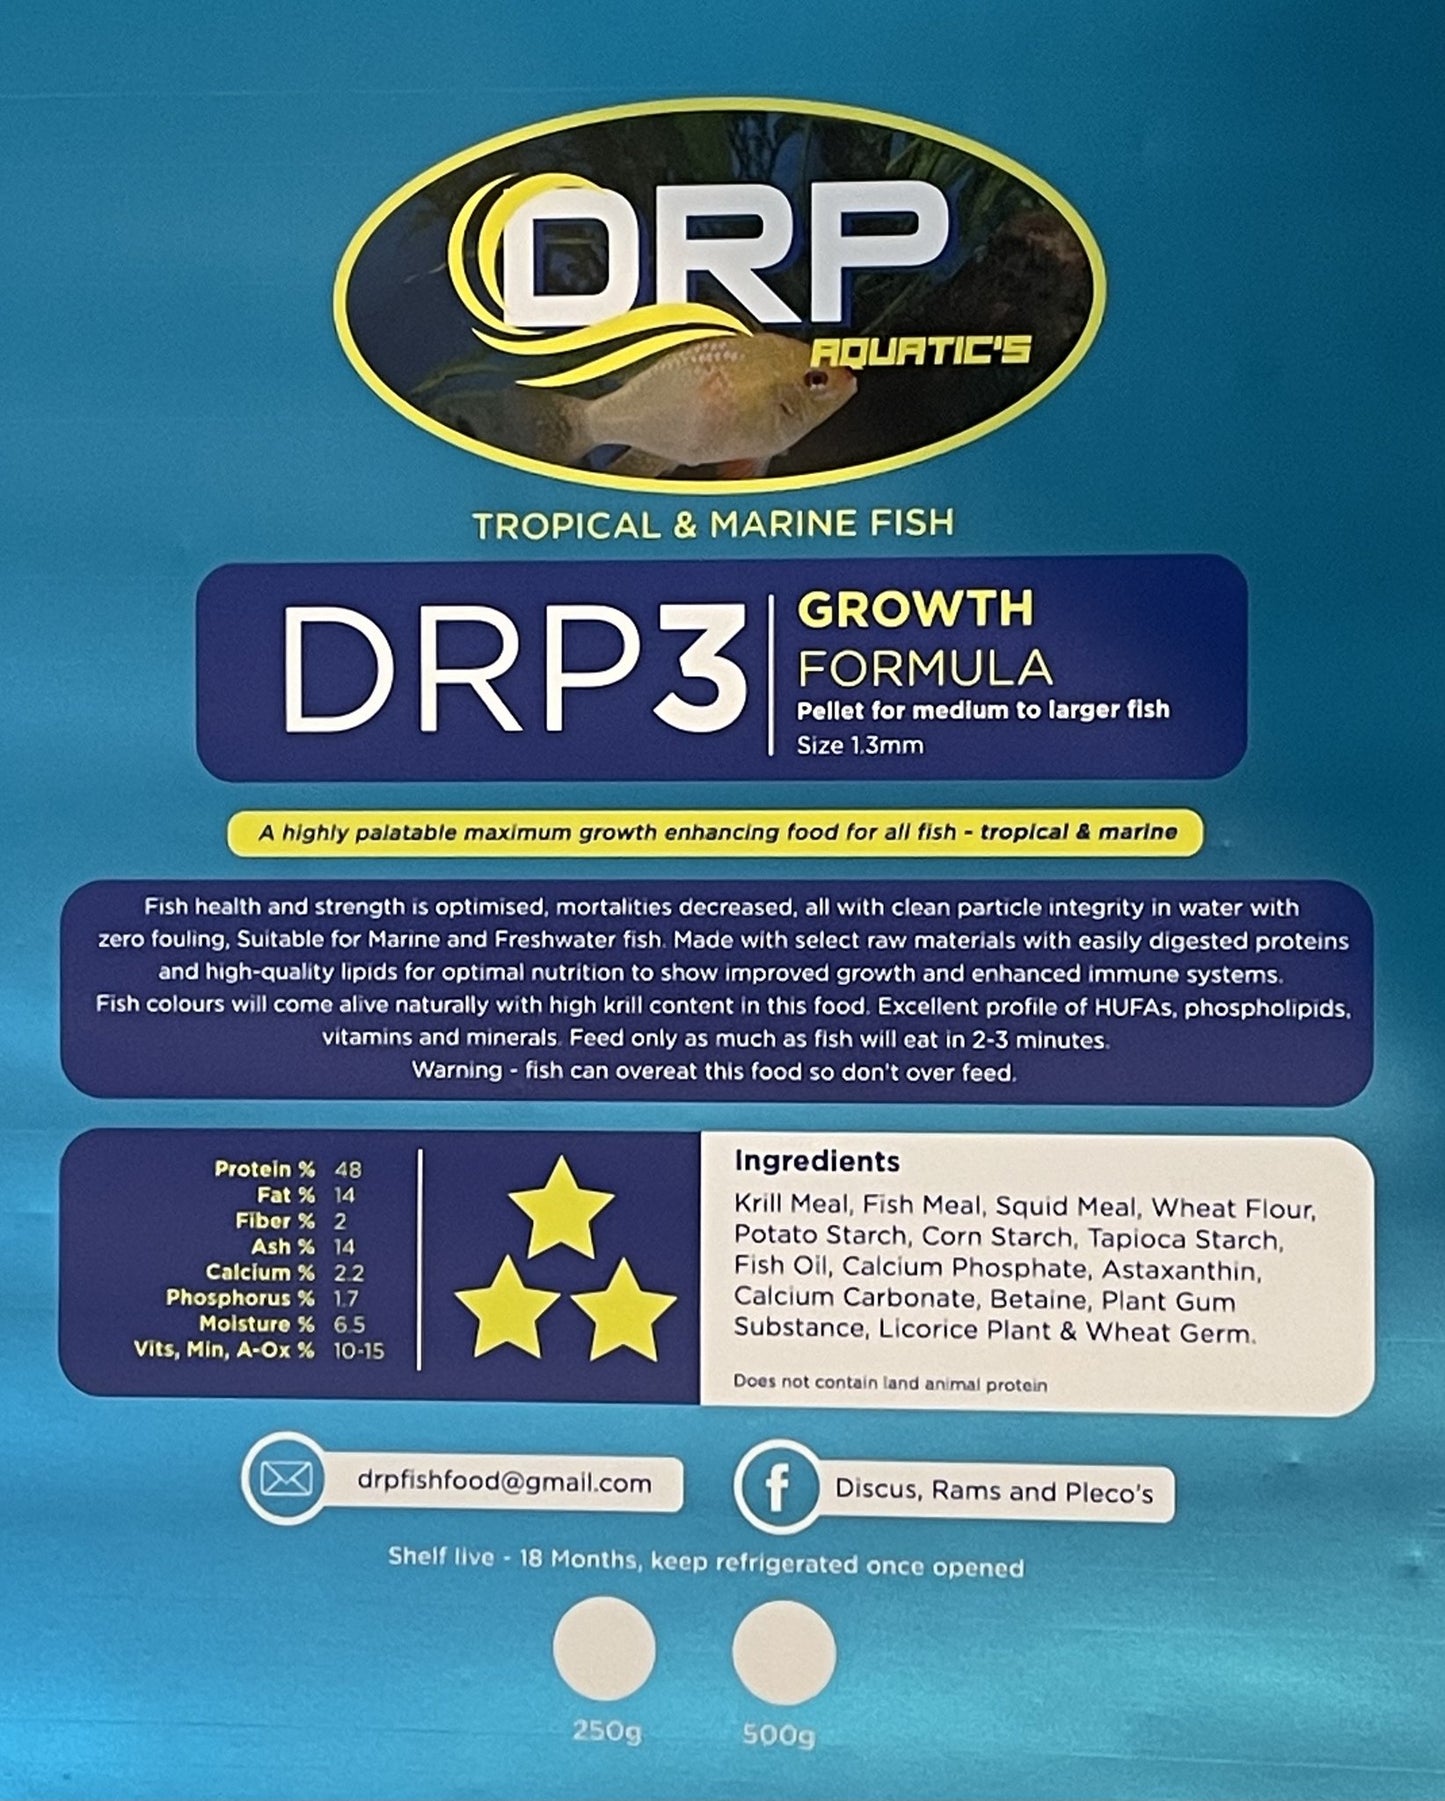 DRP 3 Aquatic Growth Formula